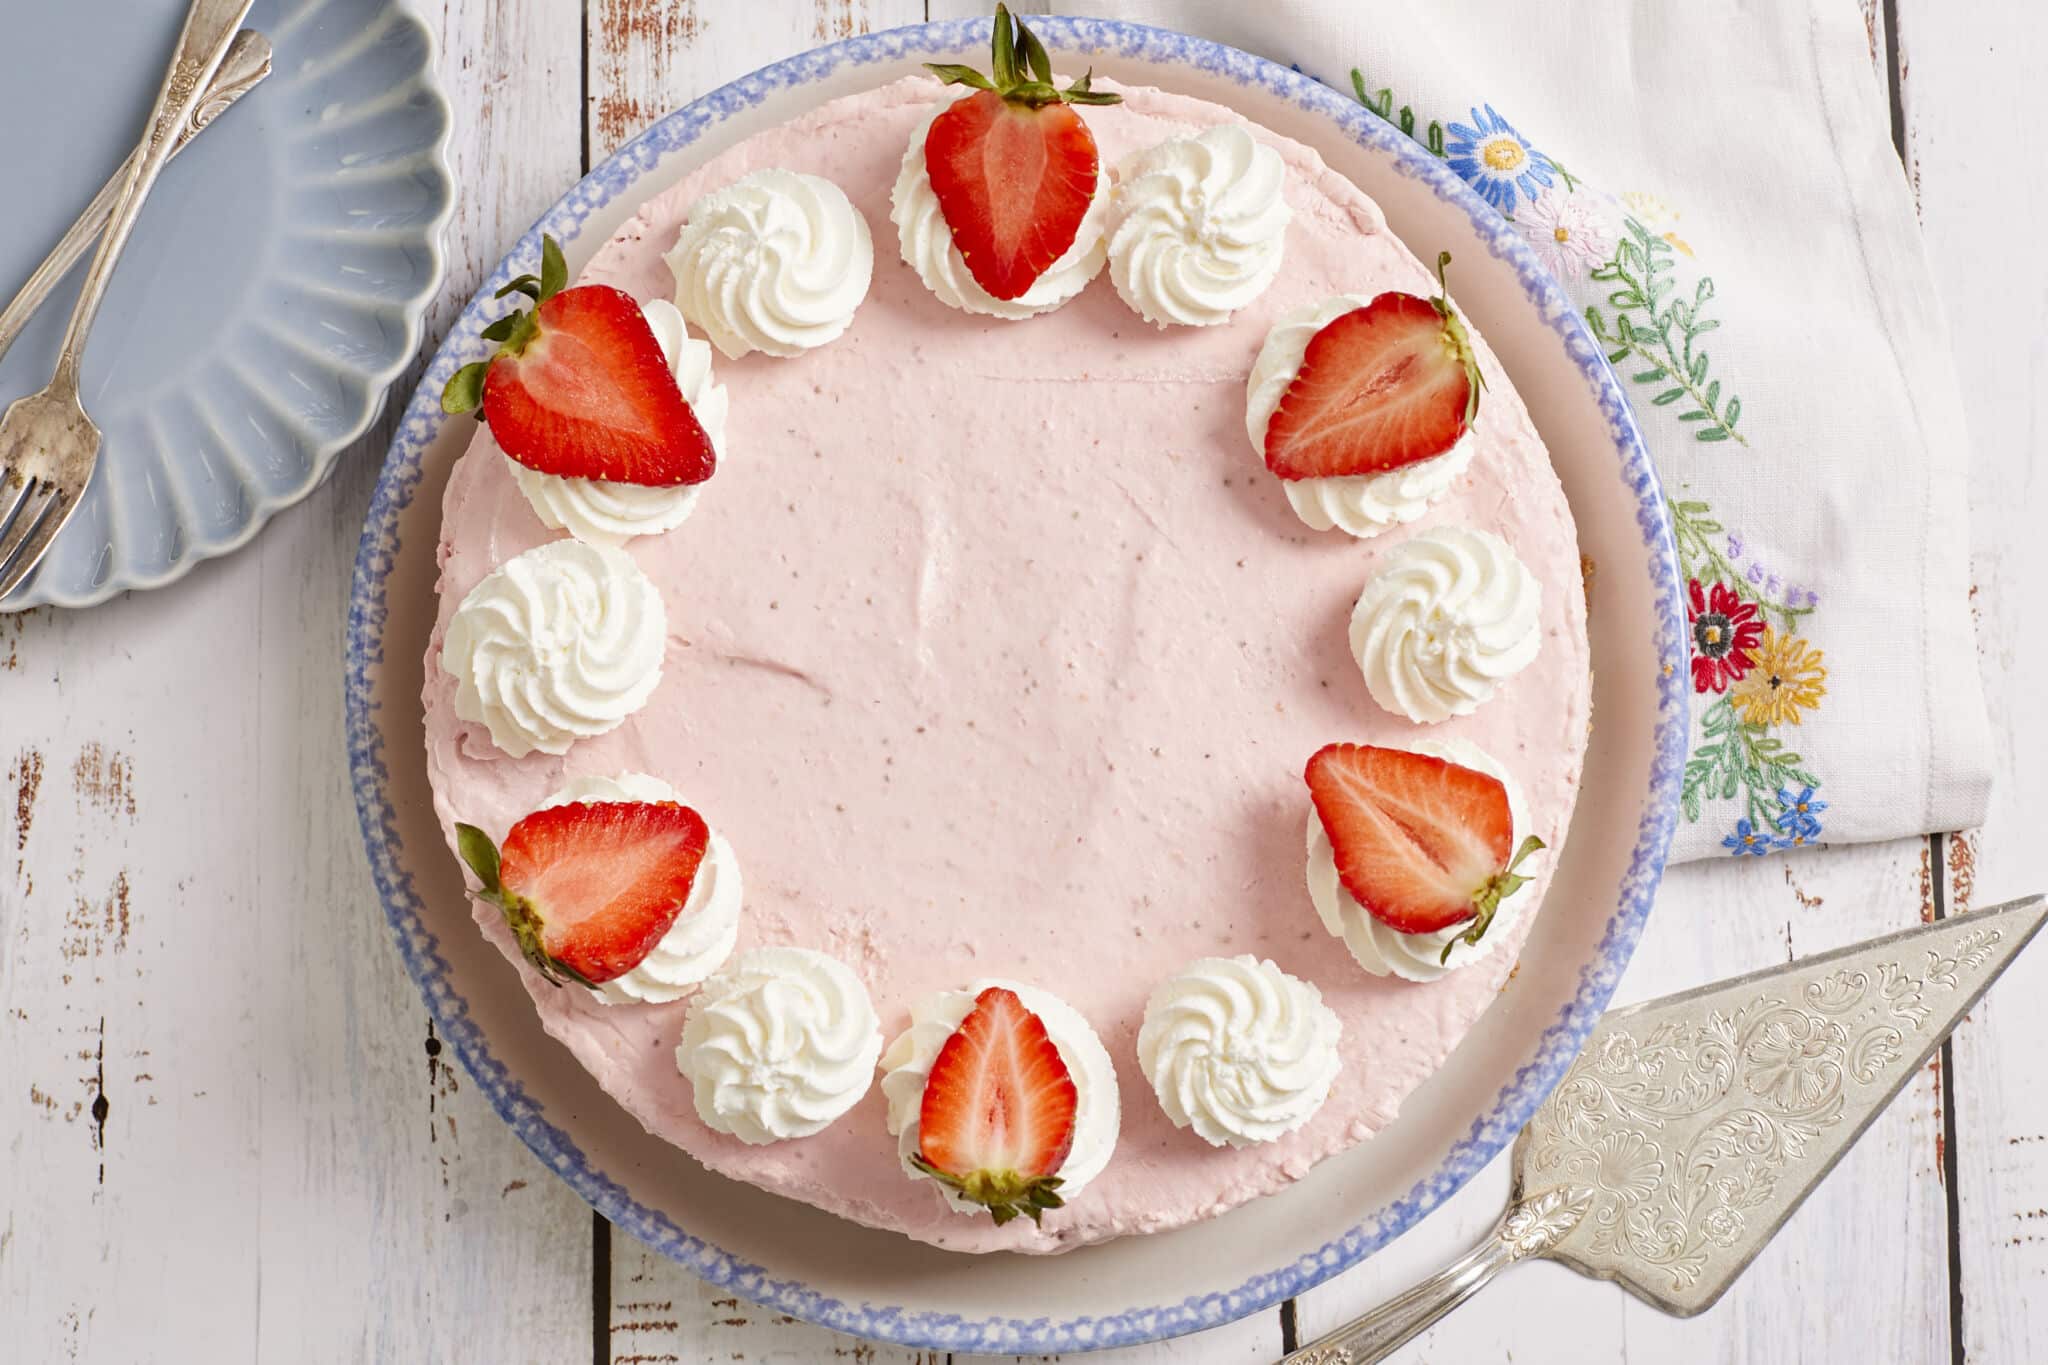 https://www.biggerbolderbaking.com/wp-content/uploads/2022/04/No-Bake-Strawberry-Cheesecake-thumbnail-scaled.jpg